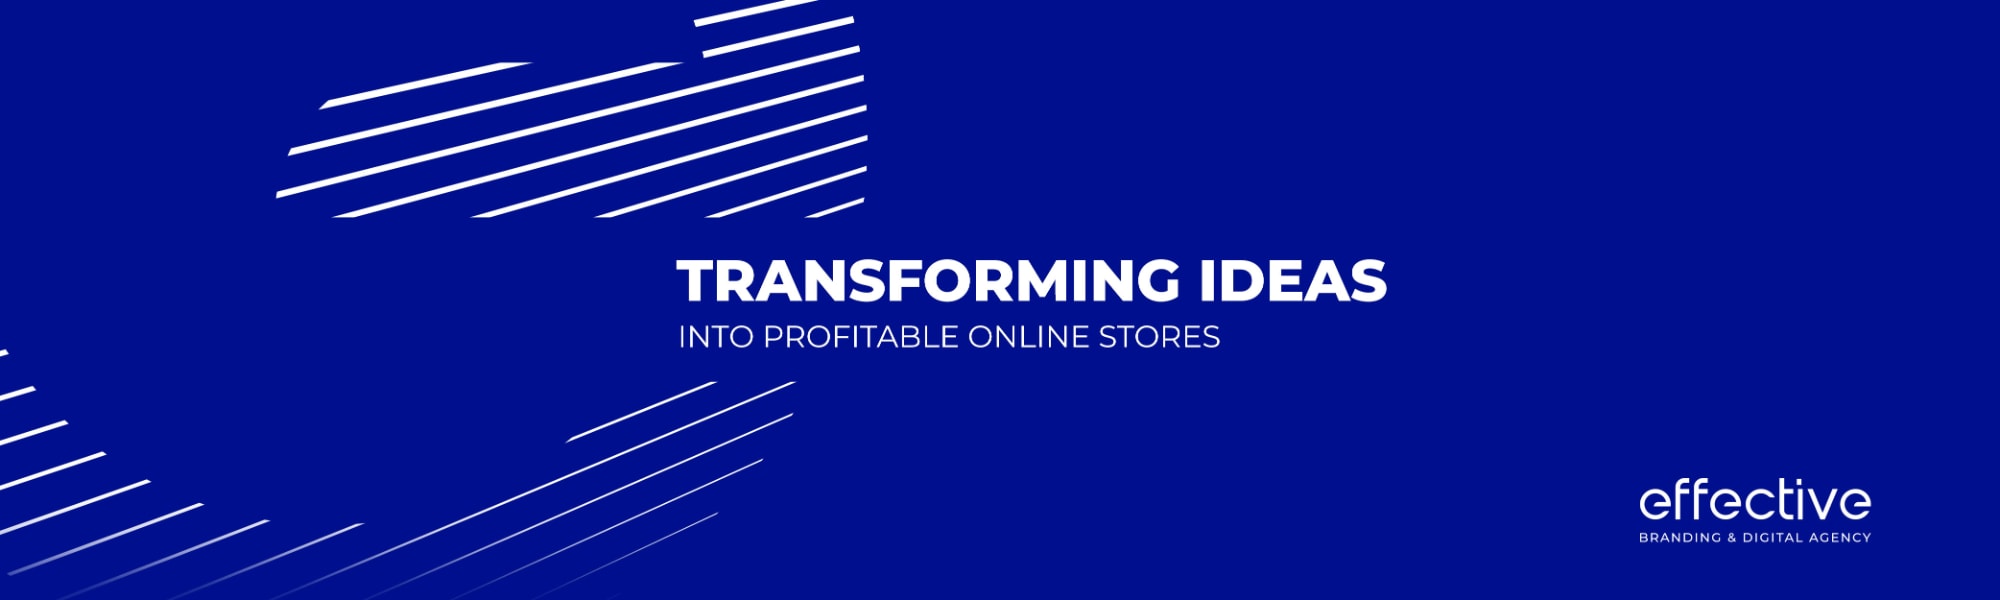 Transforming Ideas into Profitable Online Stores